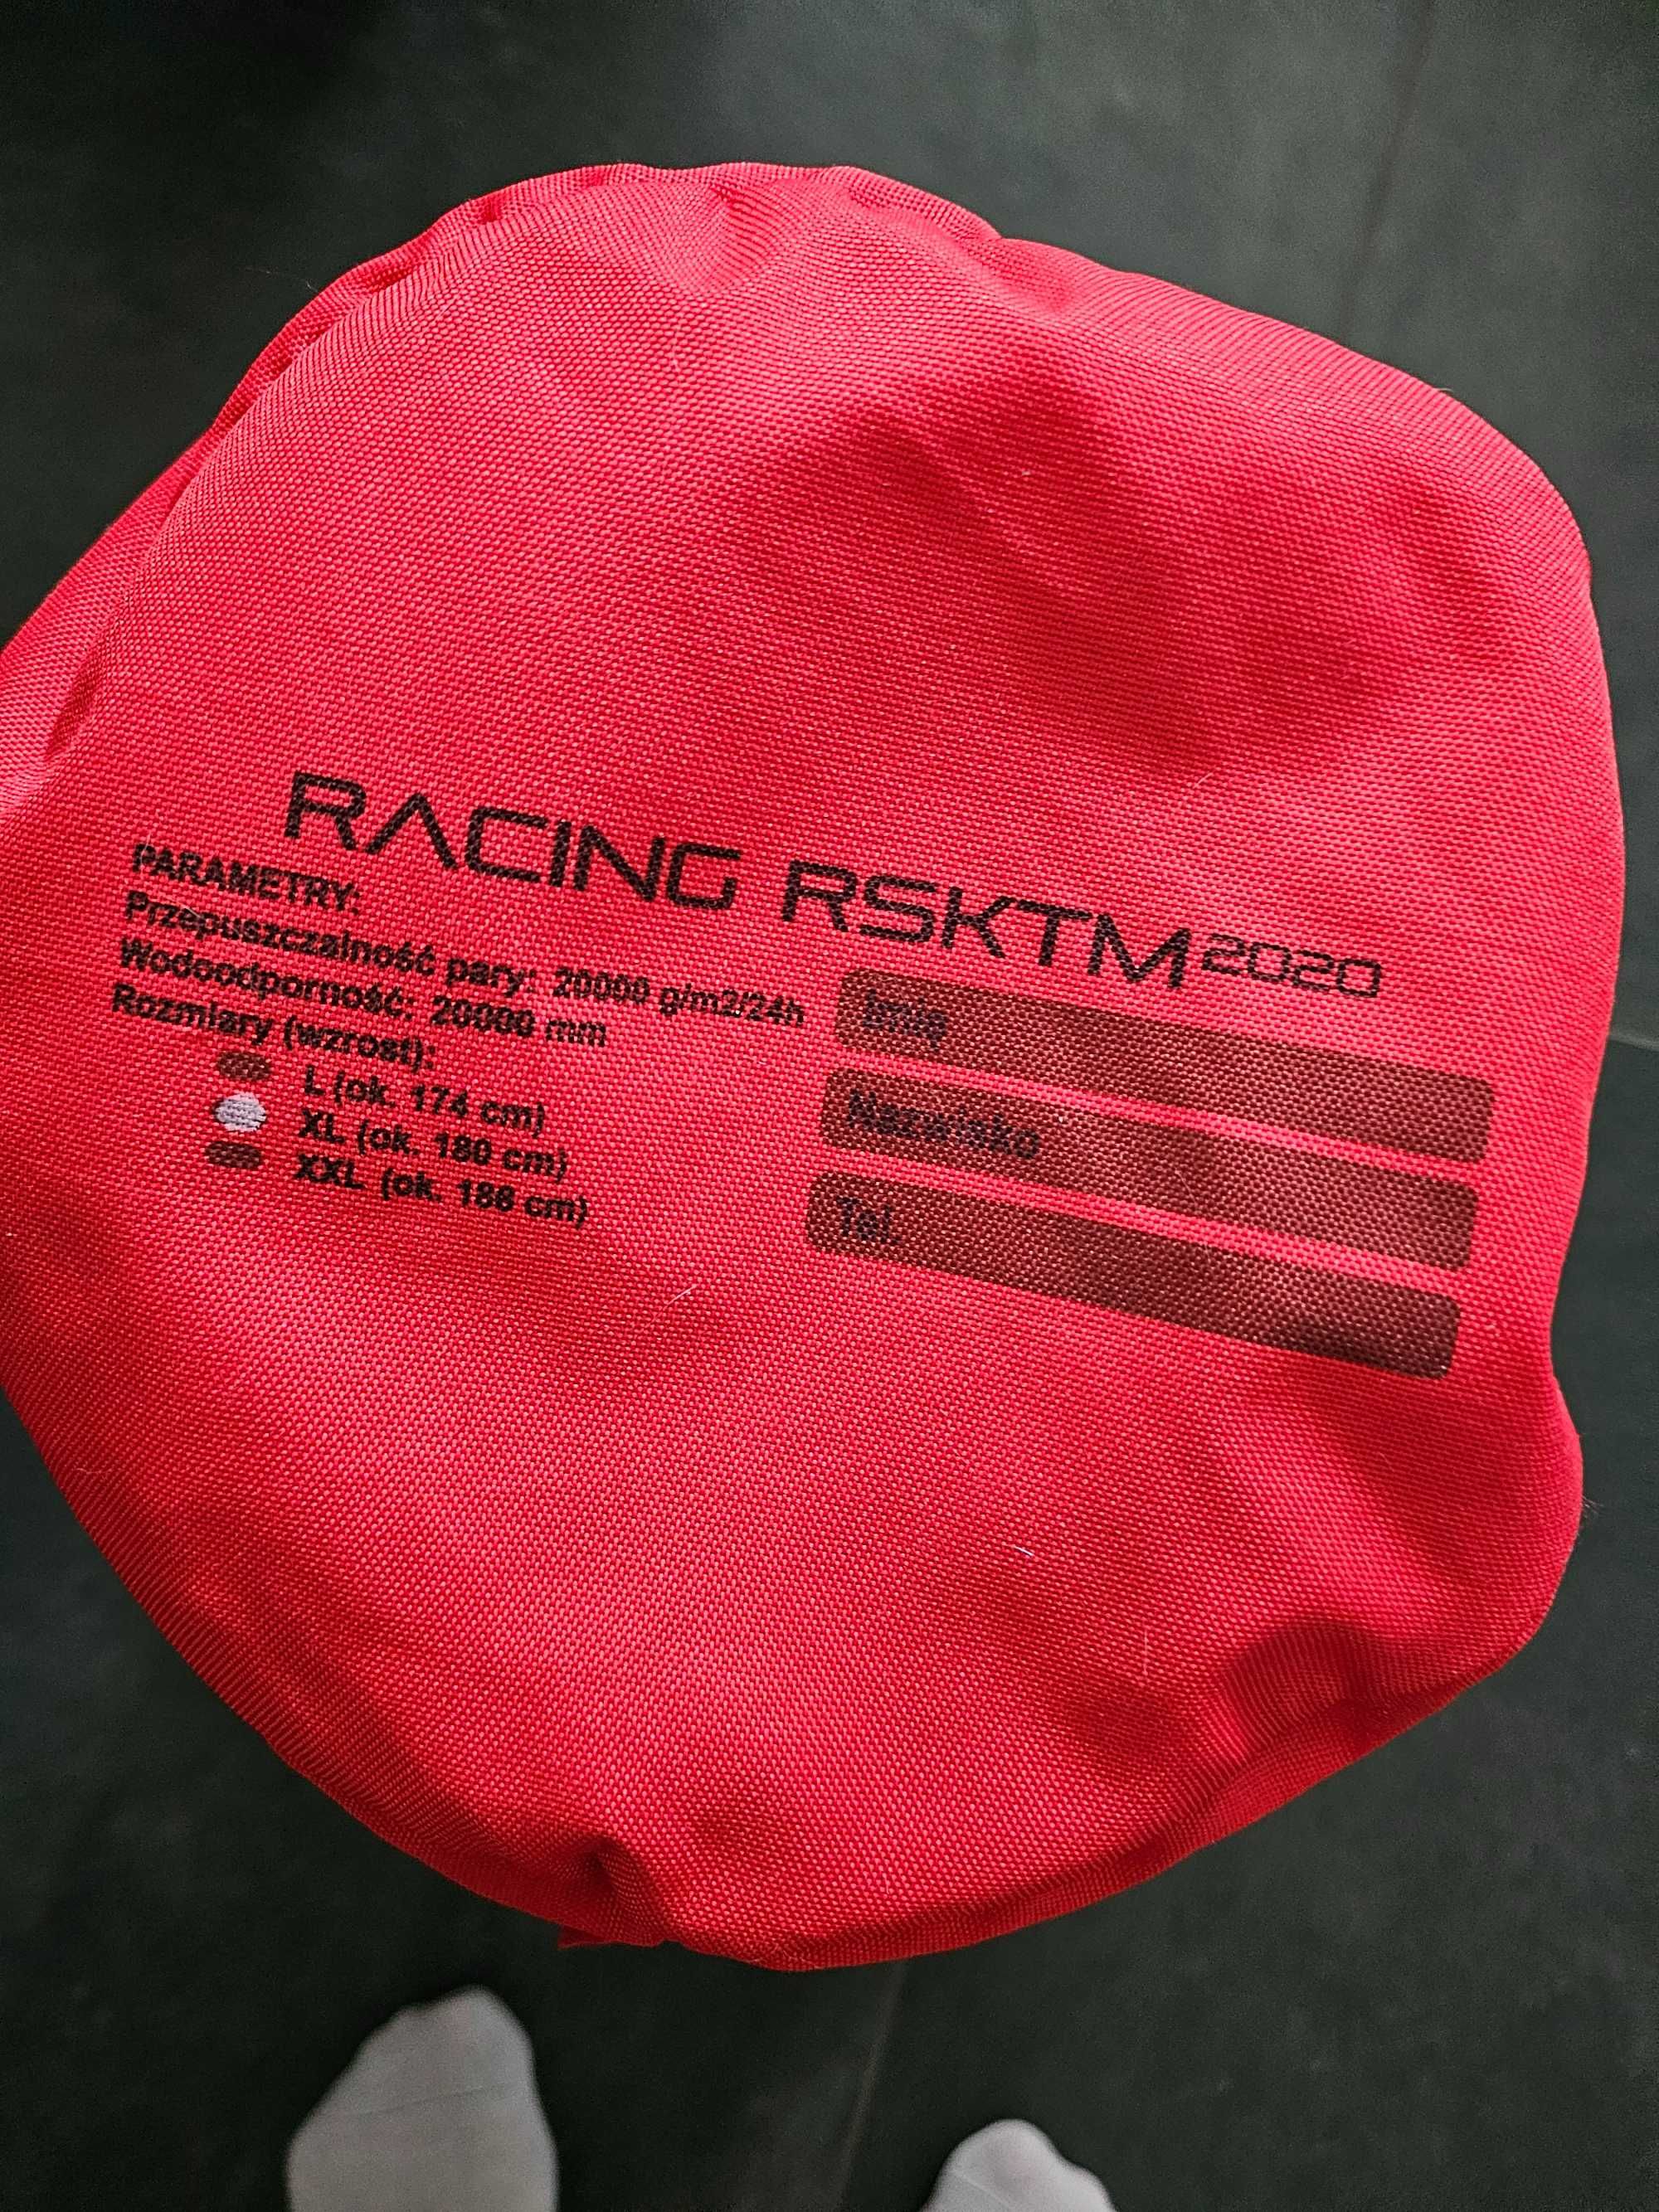 Profesjonalny suchy skafander DRY OVERALL RACING RSKTM2020 rozmiar XL